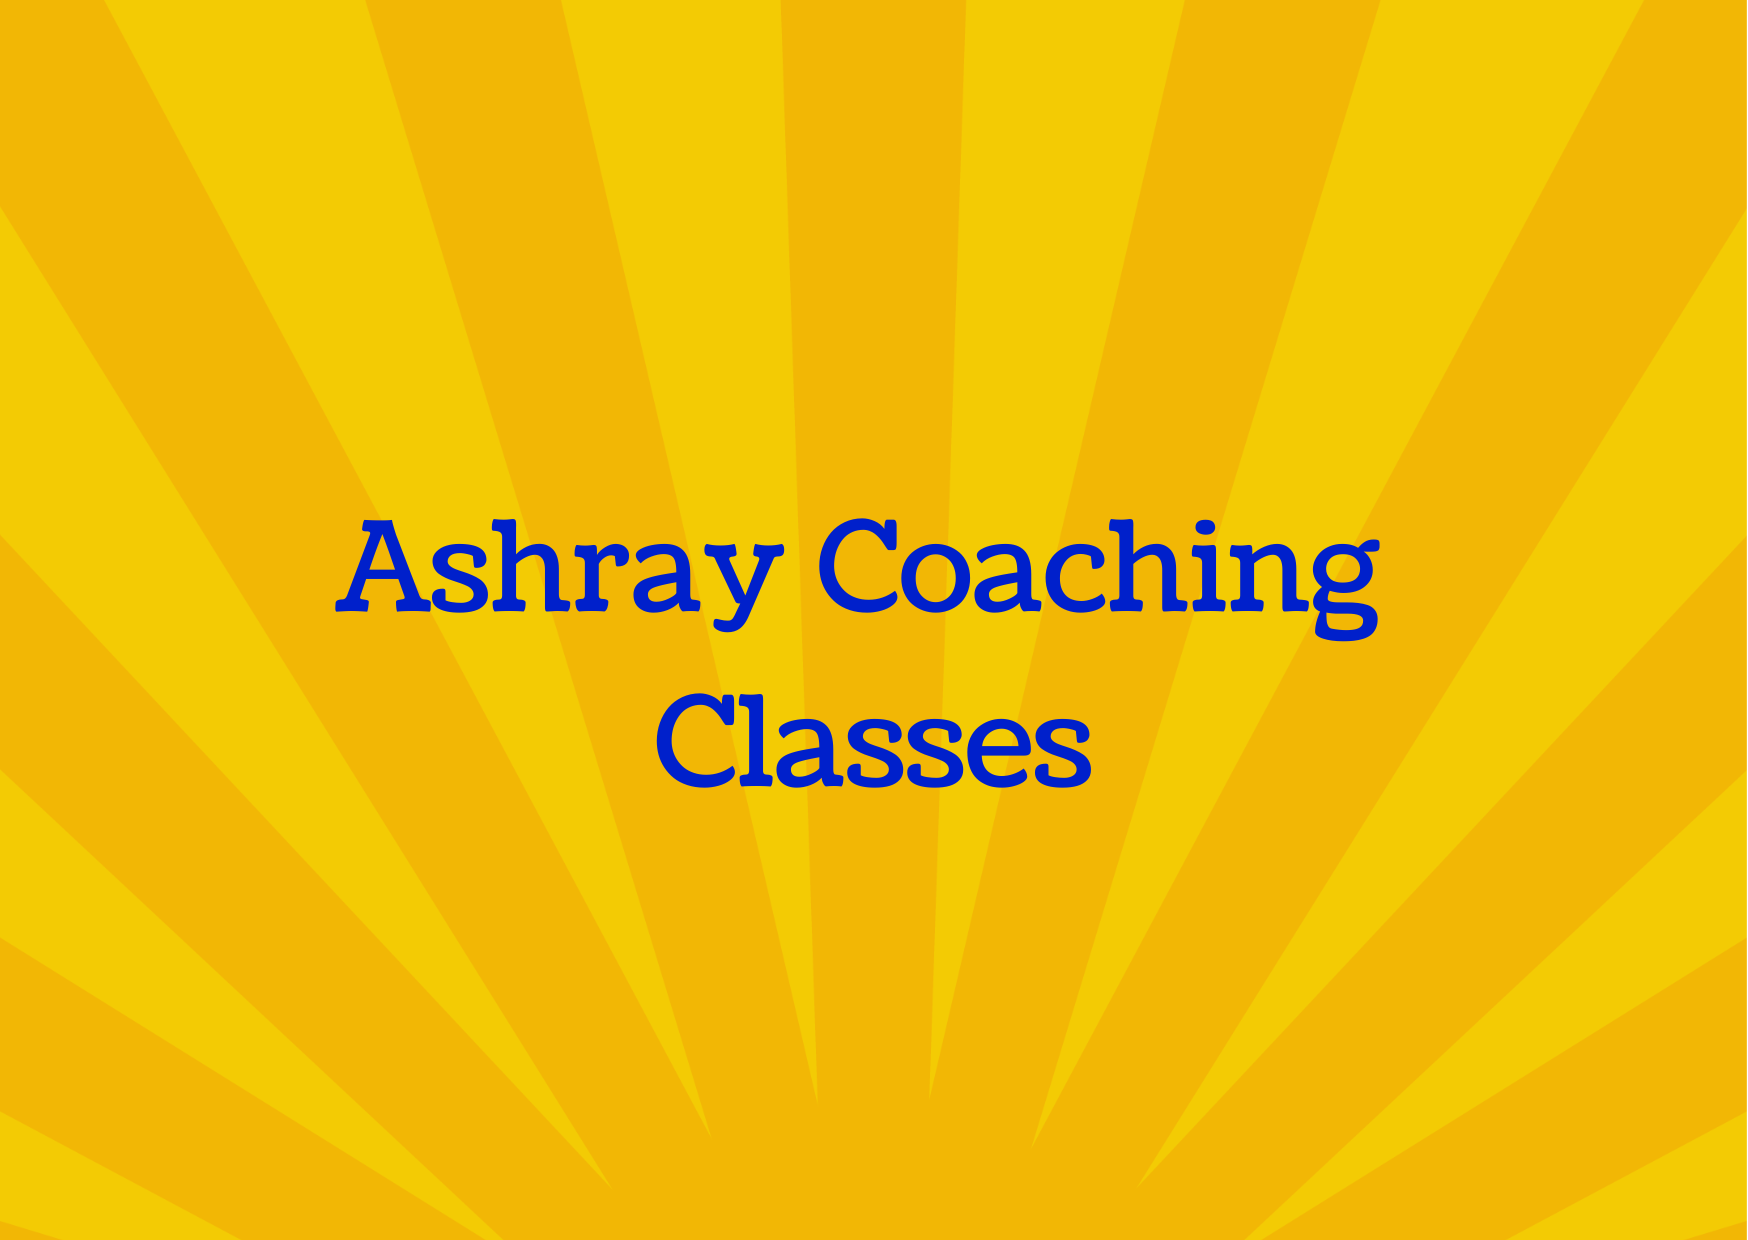 Ashray Coaching Classes,   